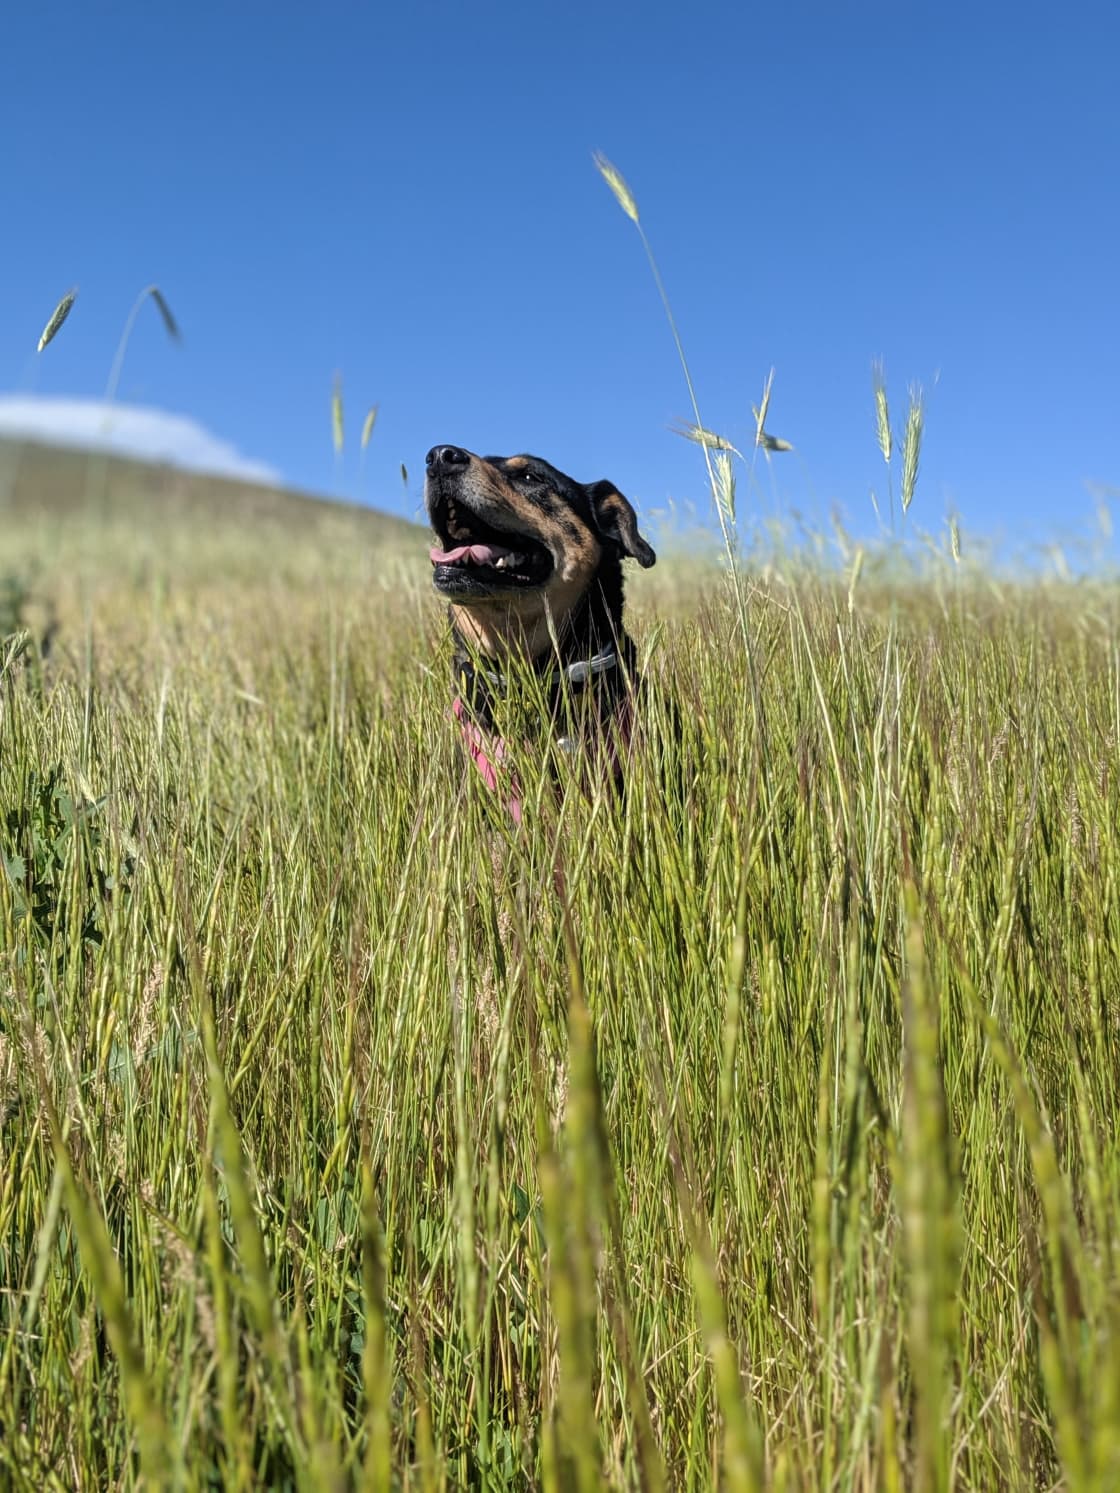 One happy doggo. 